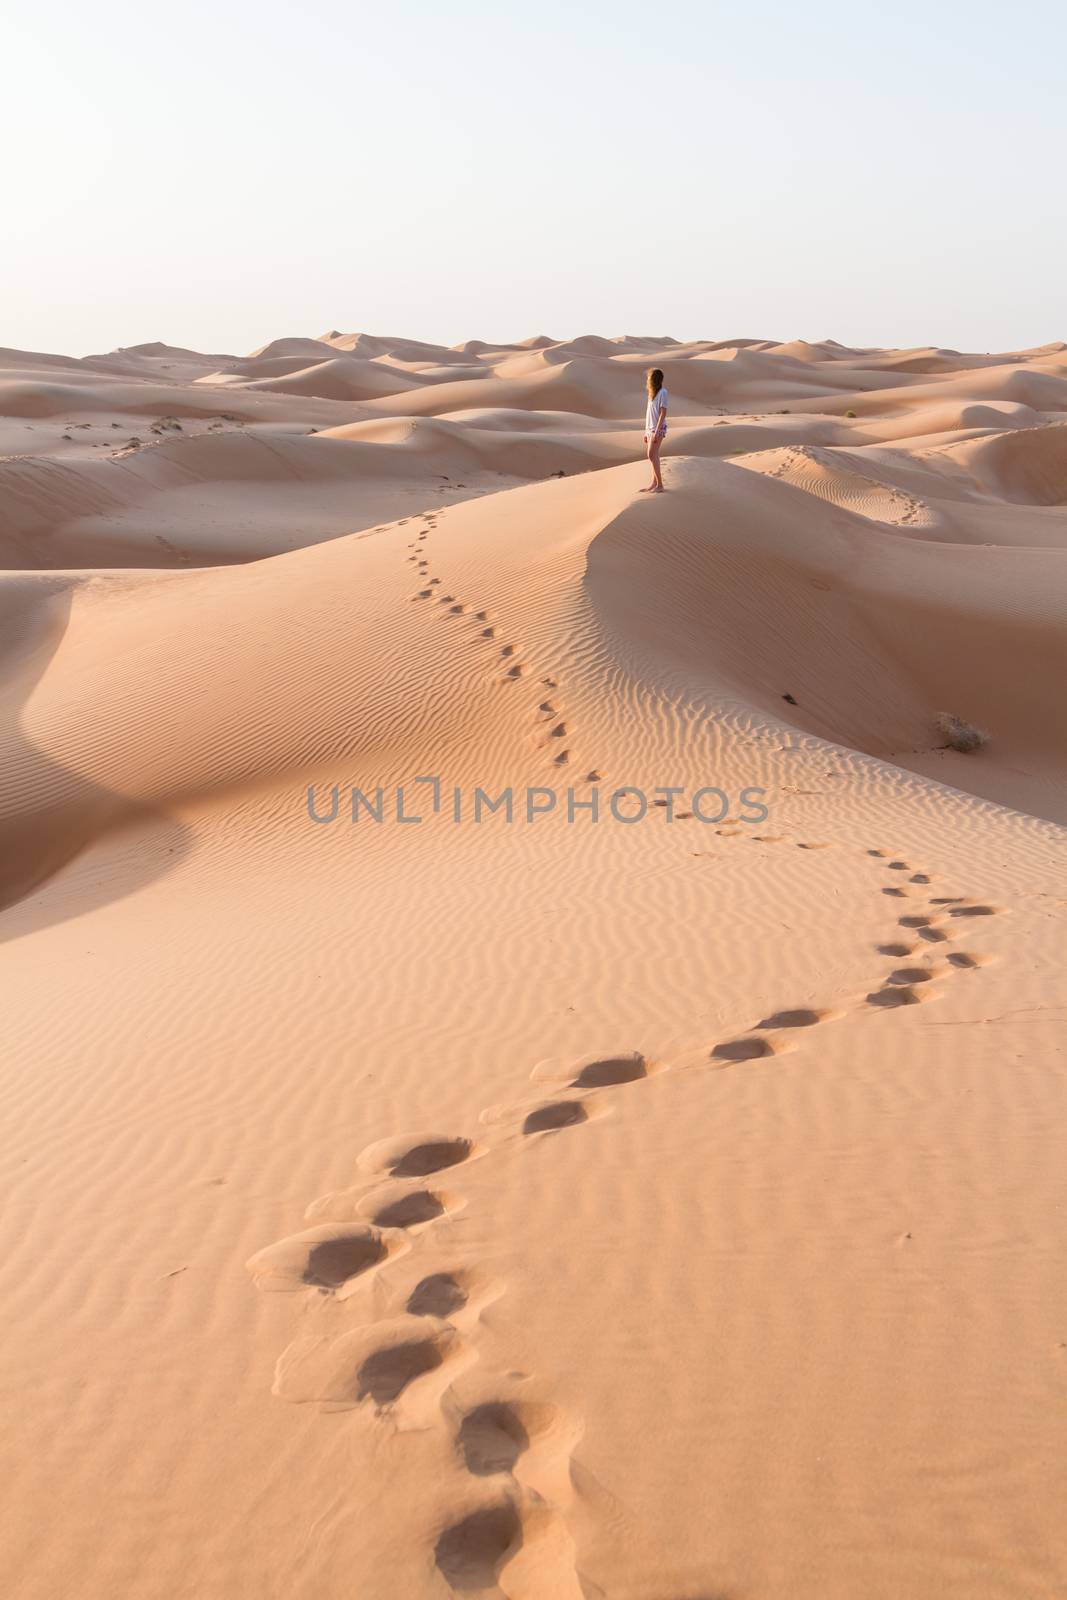 Blonde female Caucasian traveler leaving footprints in sand dunes when walking in dessert in Oman by kasto